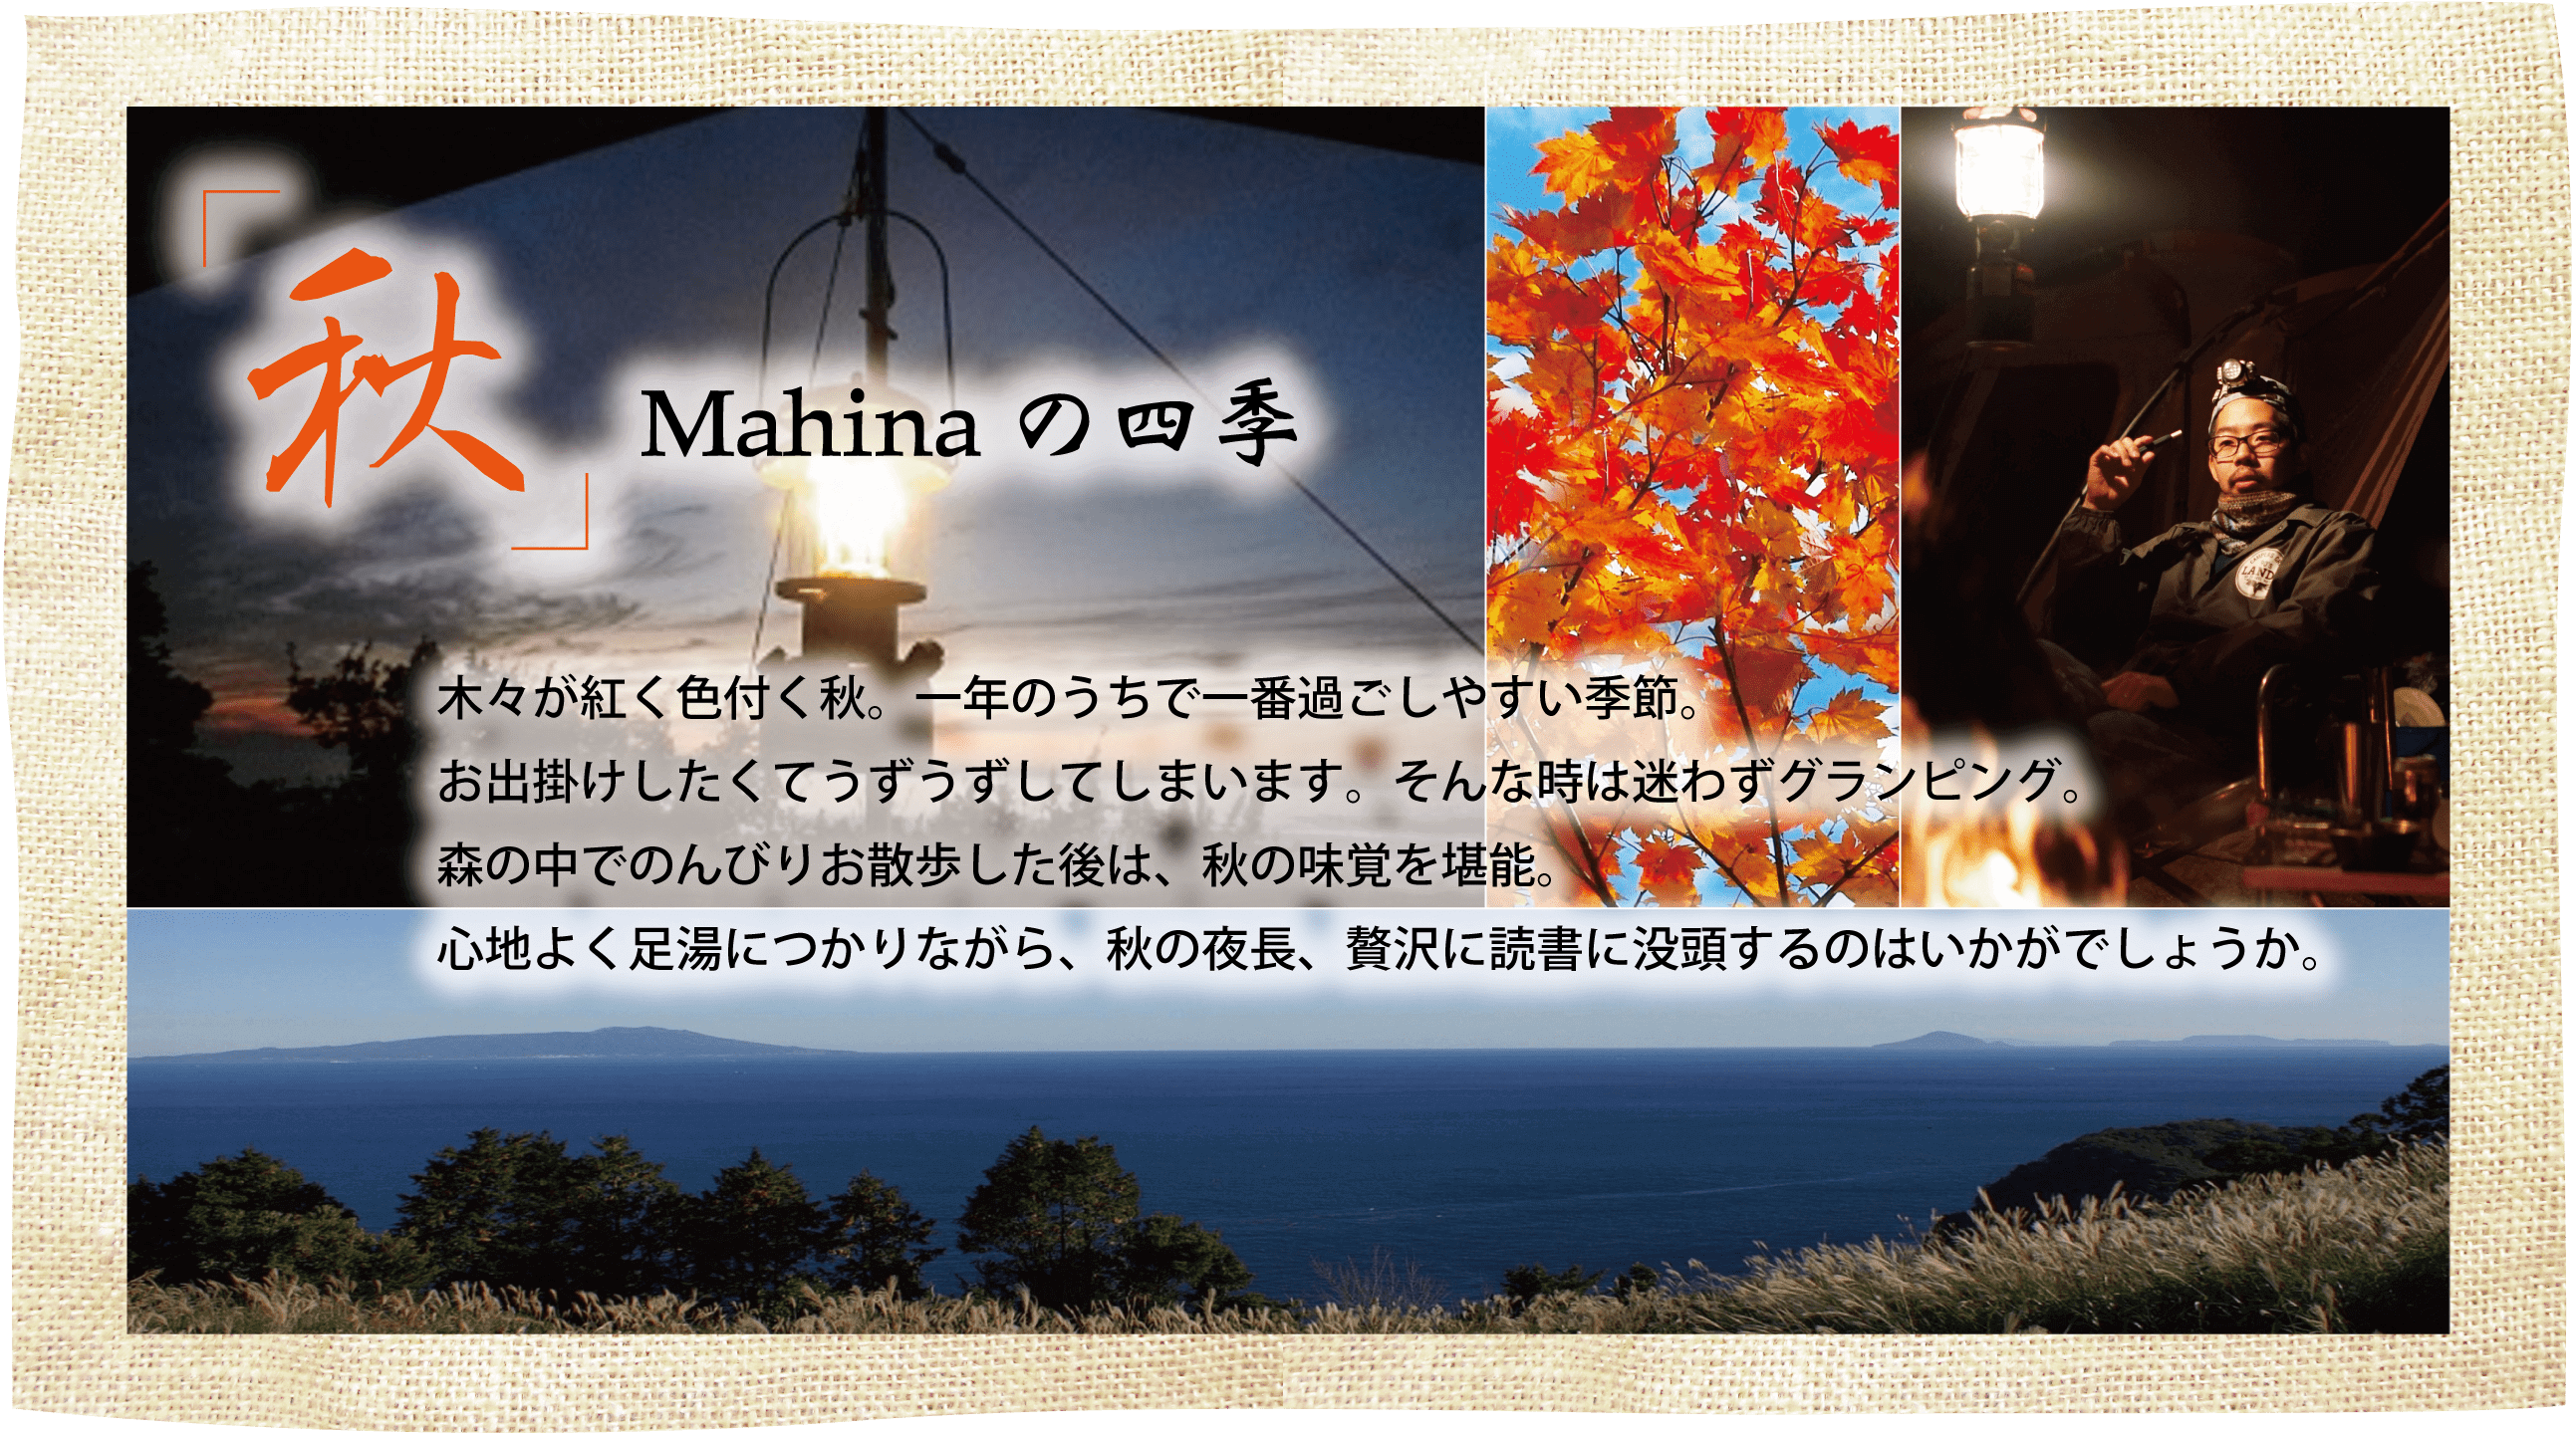 Mahinaの四季-秋